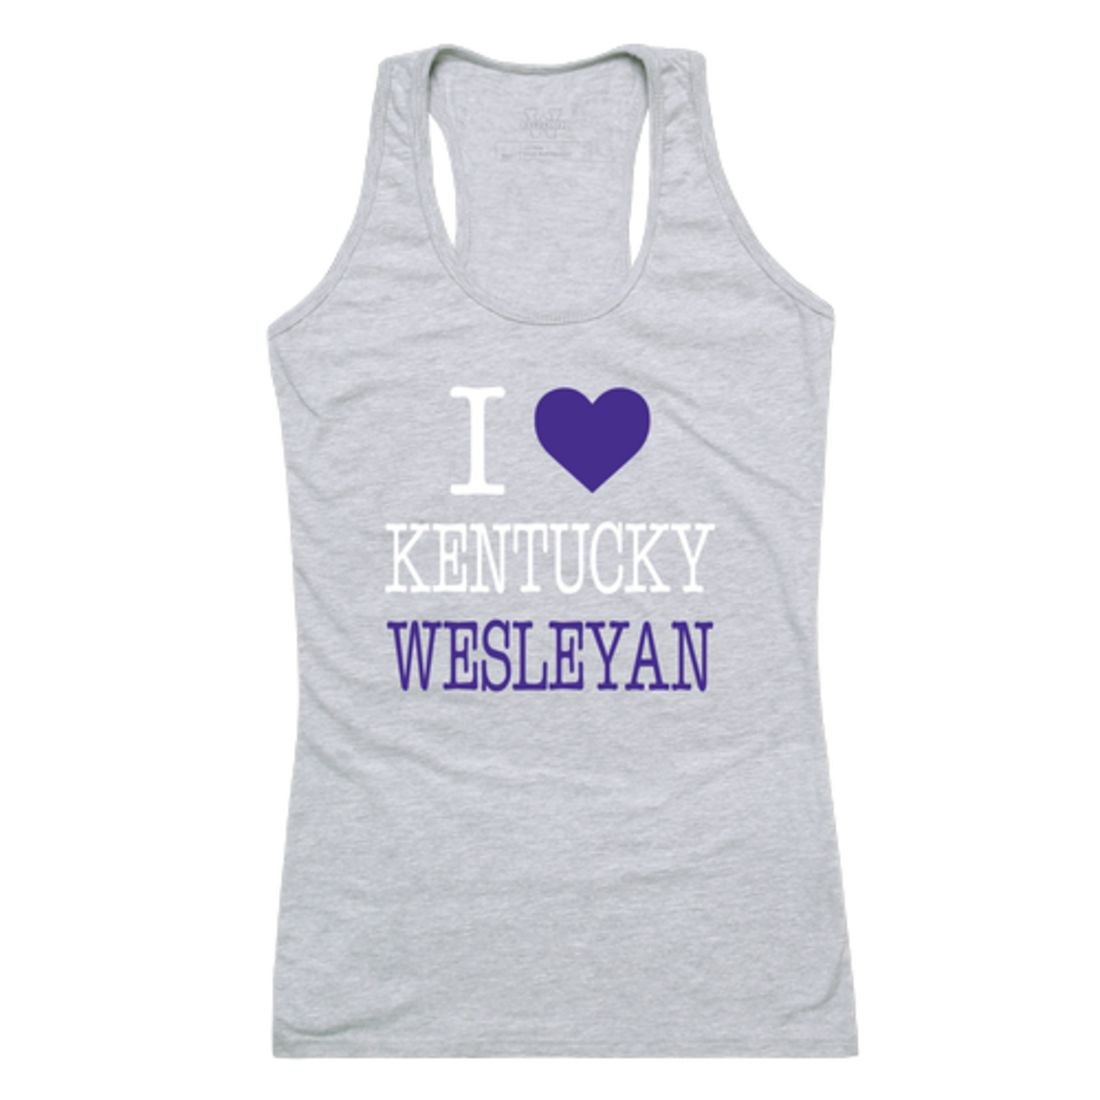 I Love Kentucky Wesleyan College Panthers Womens Tank Top